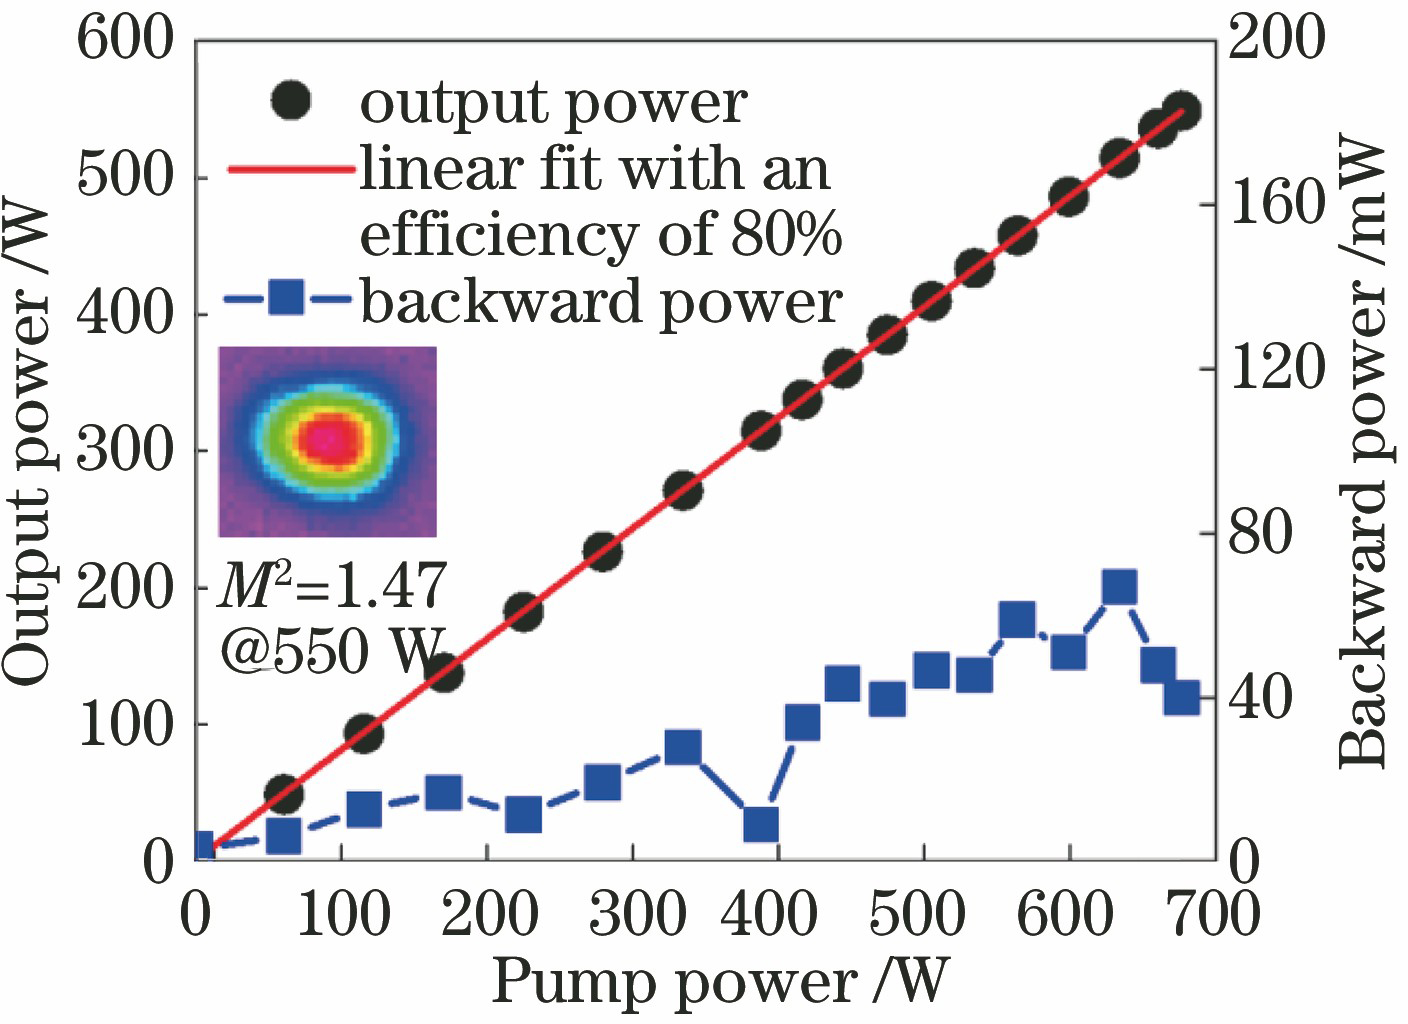 Output power and backward power versus pump power